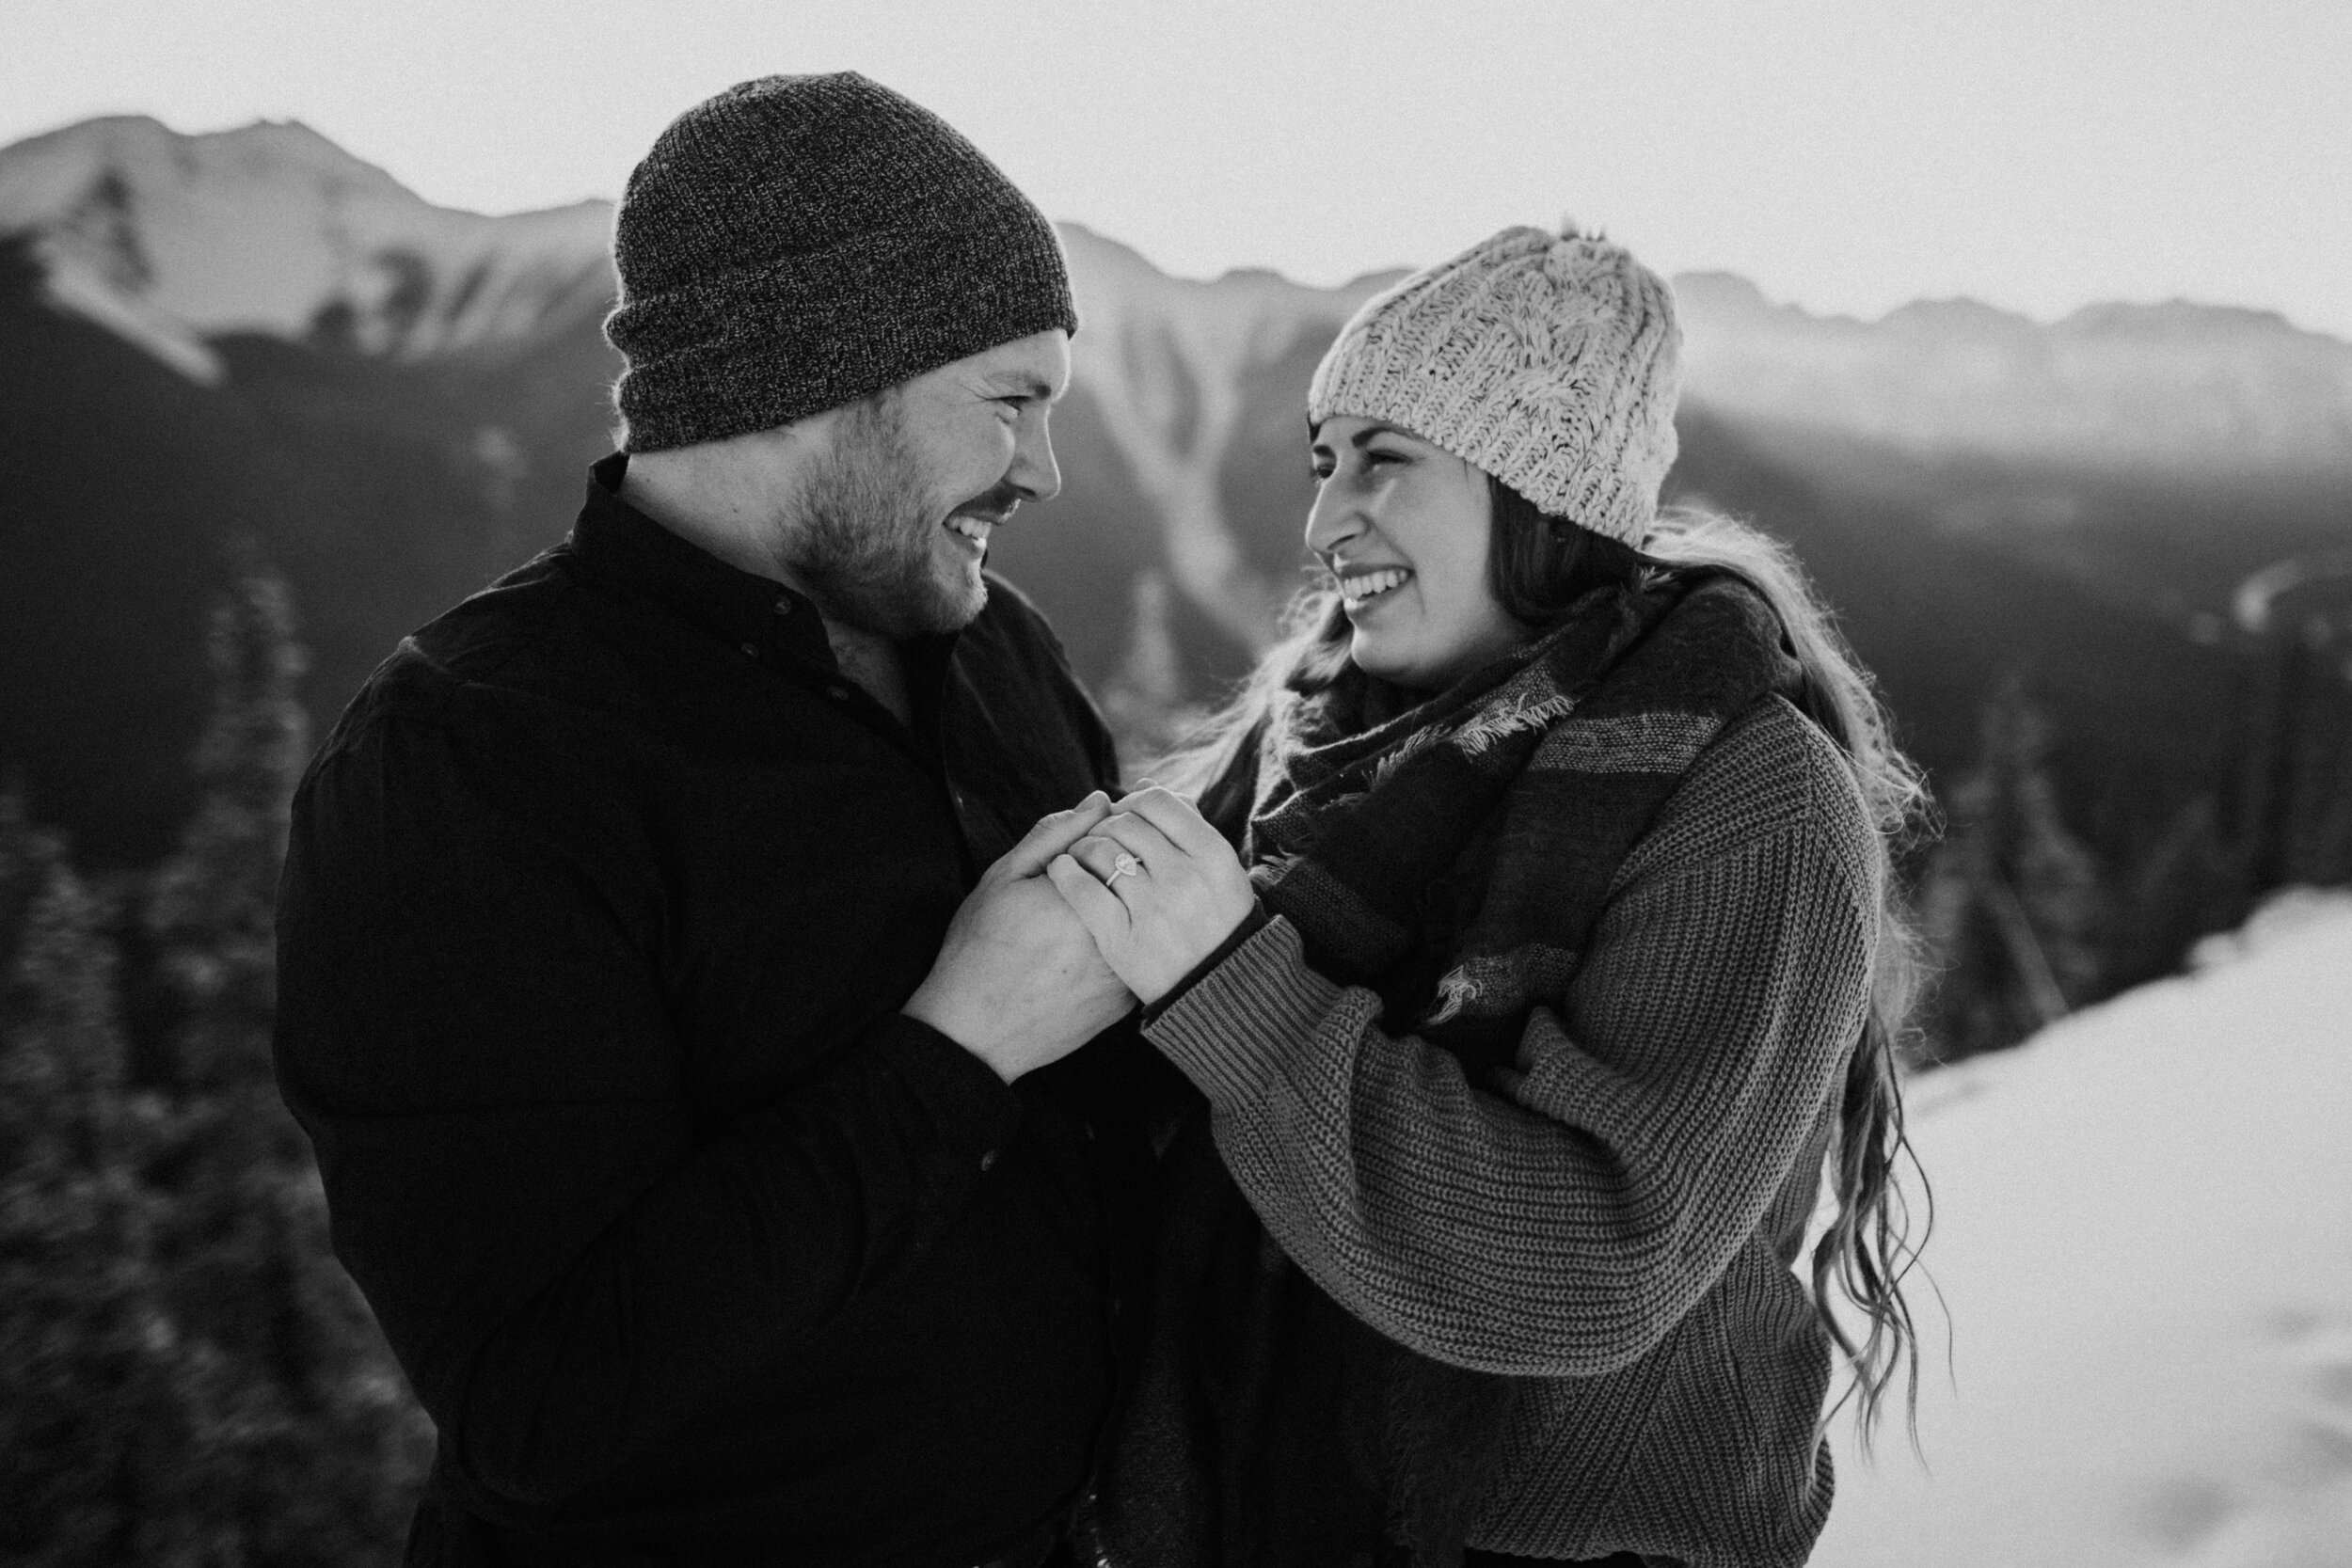 Banff Wedding Photographer, Banff wedding locations, Epic couple photos, mountaintop banff hike